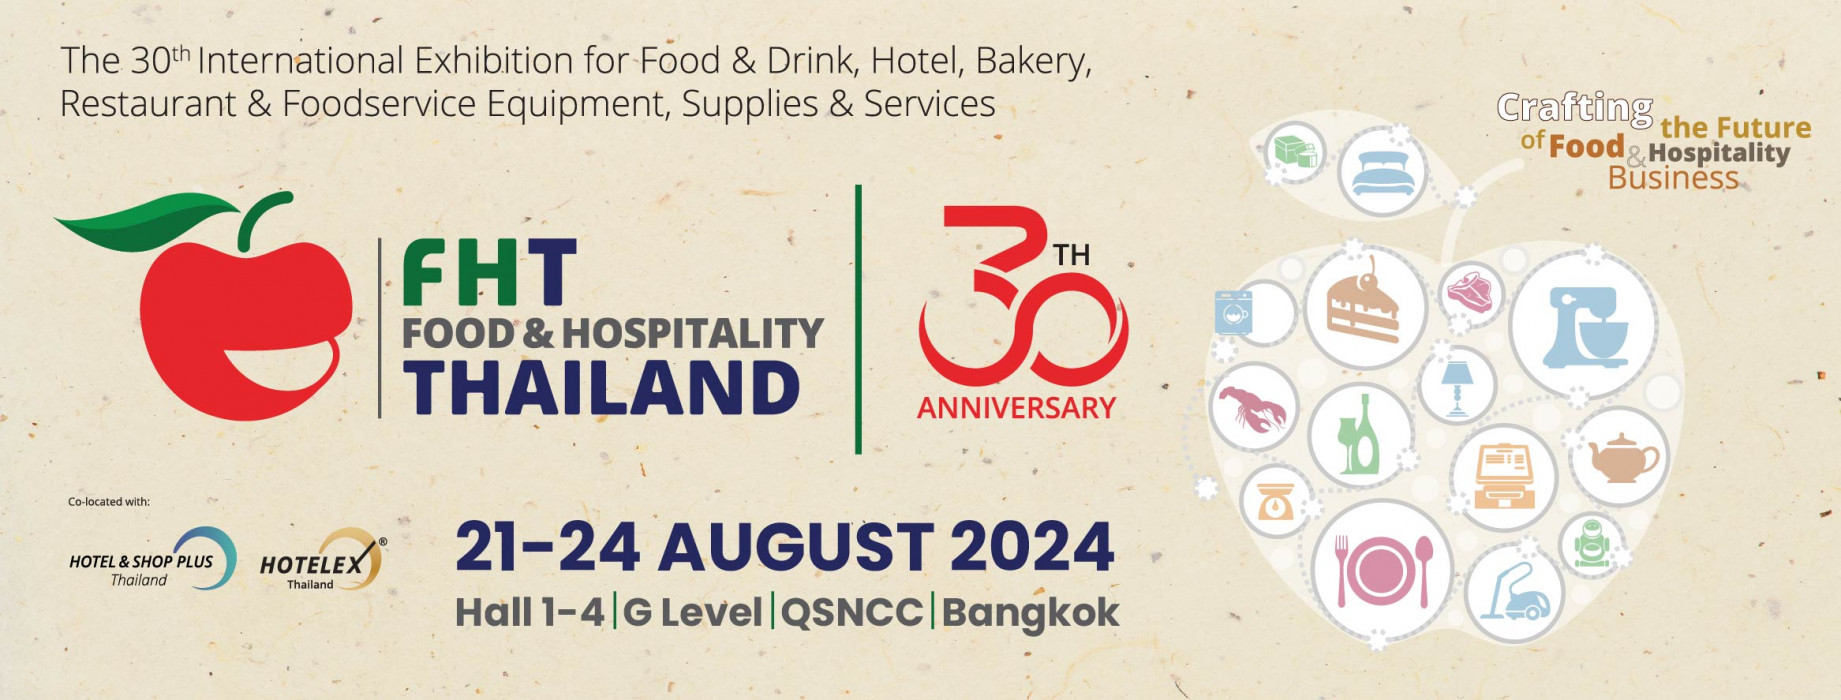 Food & Hospitality Thailand (FHT) 2024